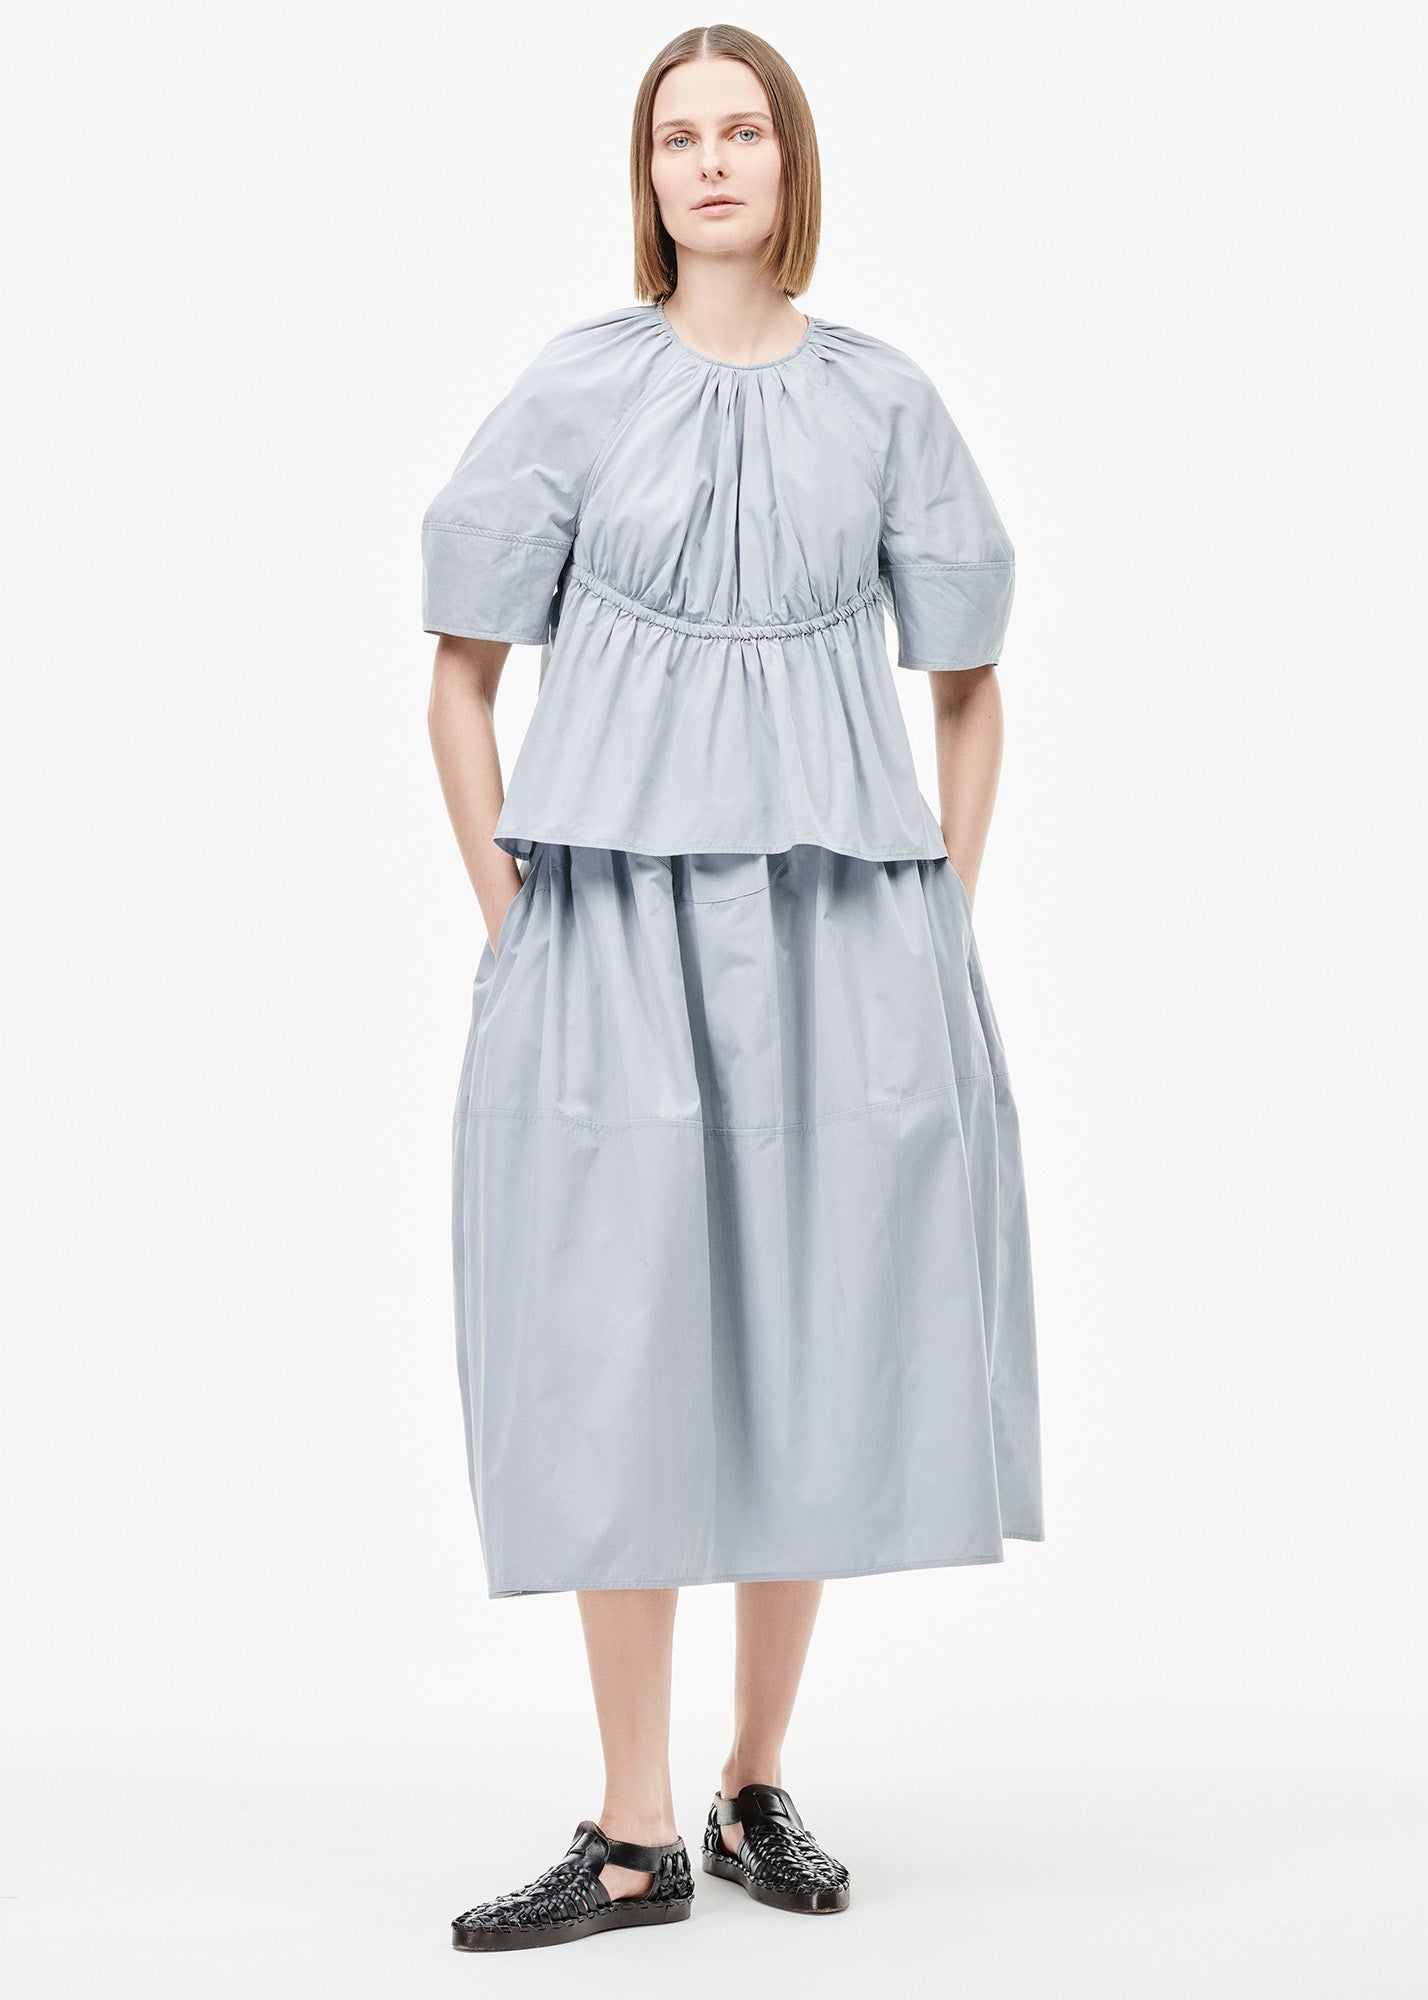 Jil Sander Women's Clothing - Dresses, Coats, Shoes | Tiina the Store